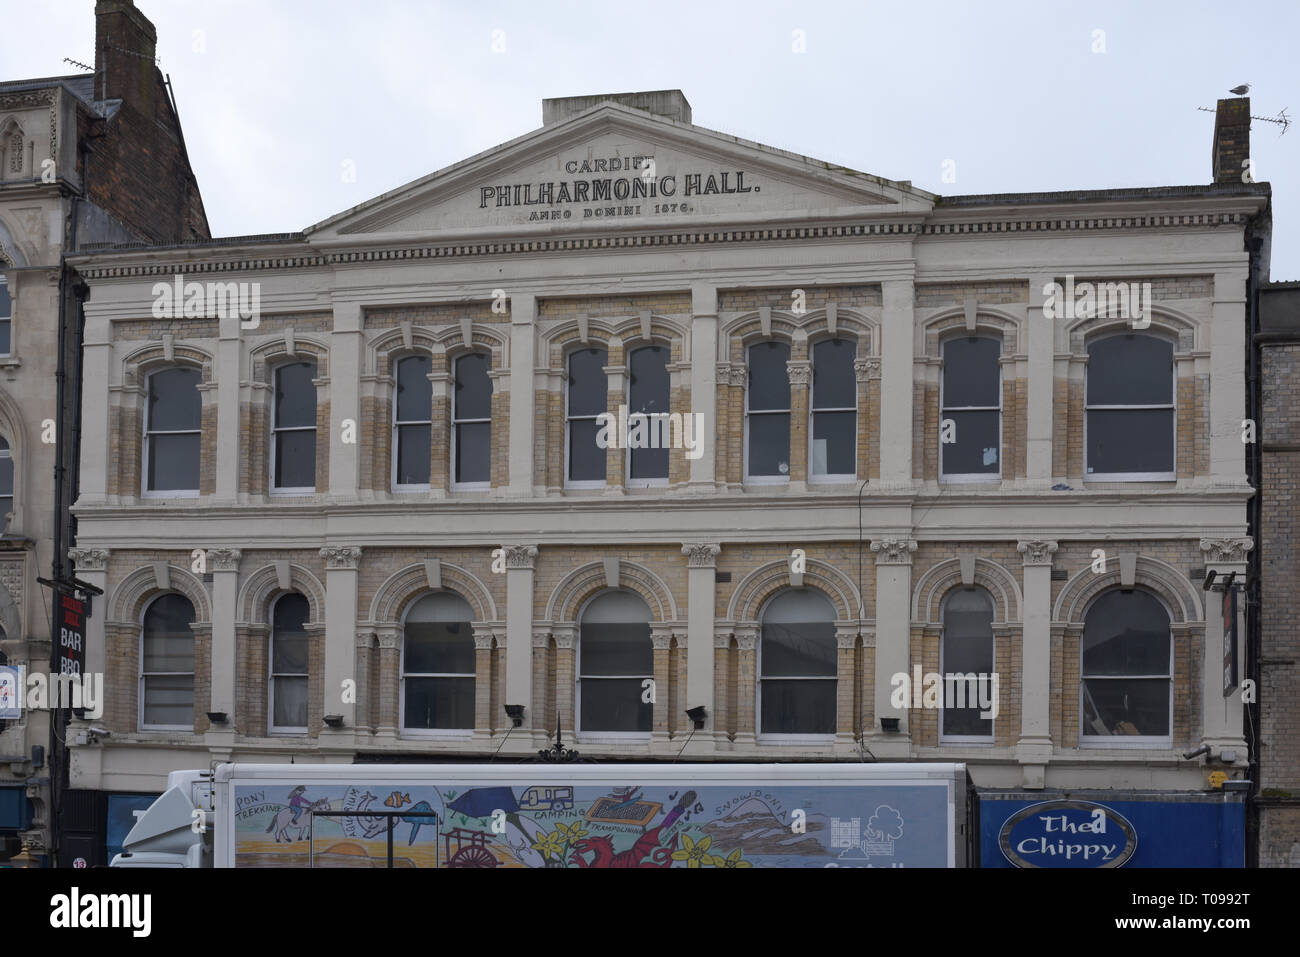 Cardiff Philharmonic Hall number 3813 Stock Photo